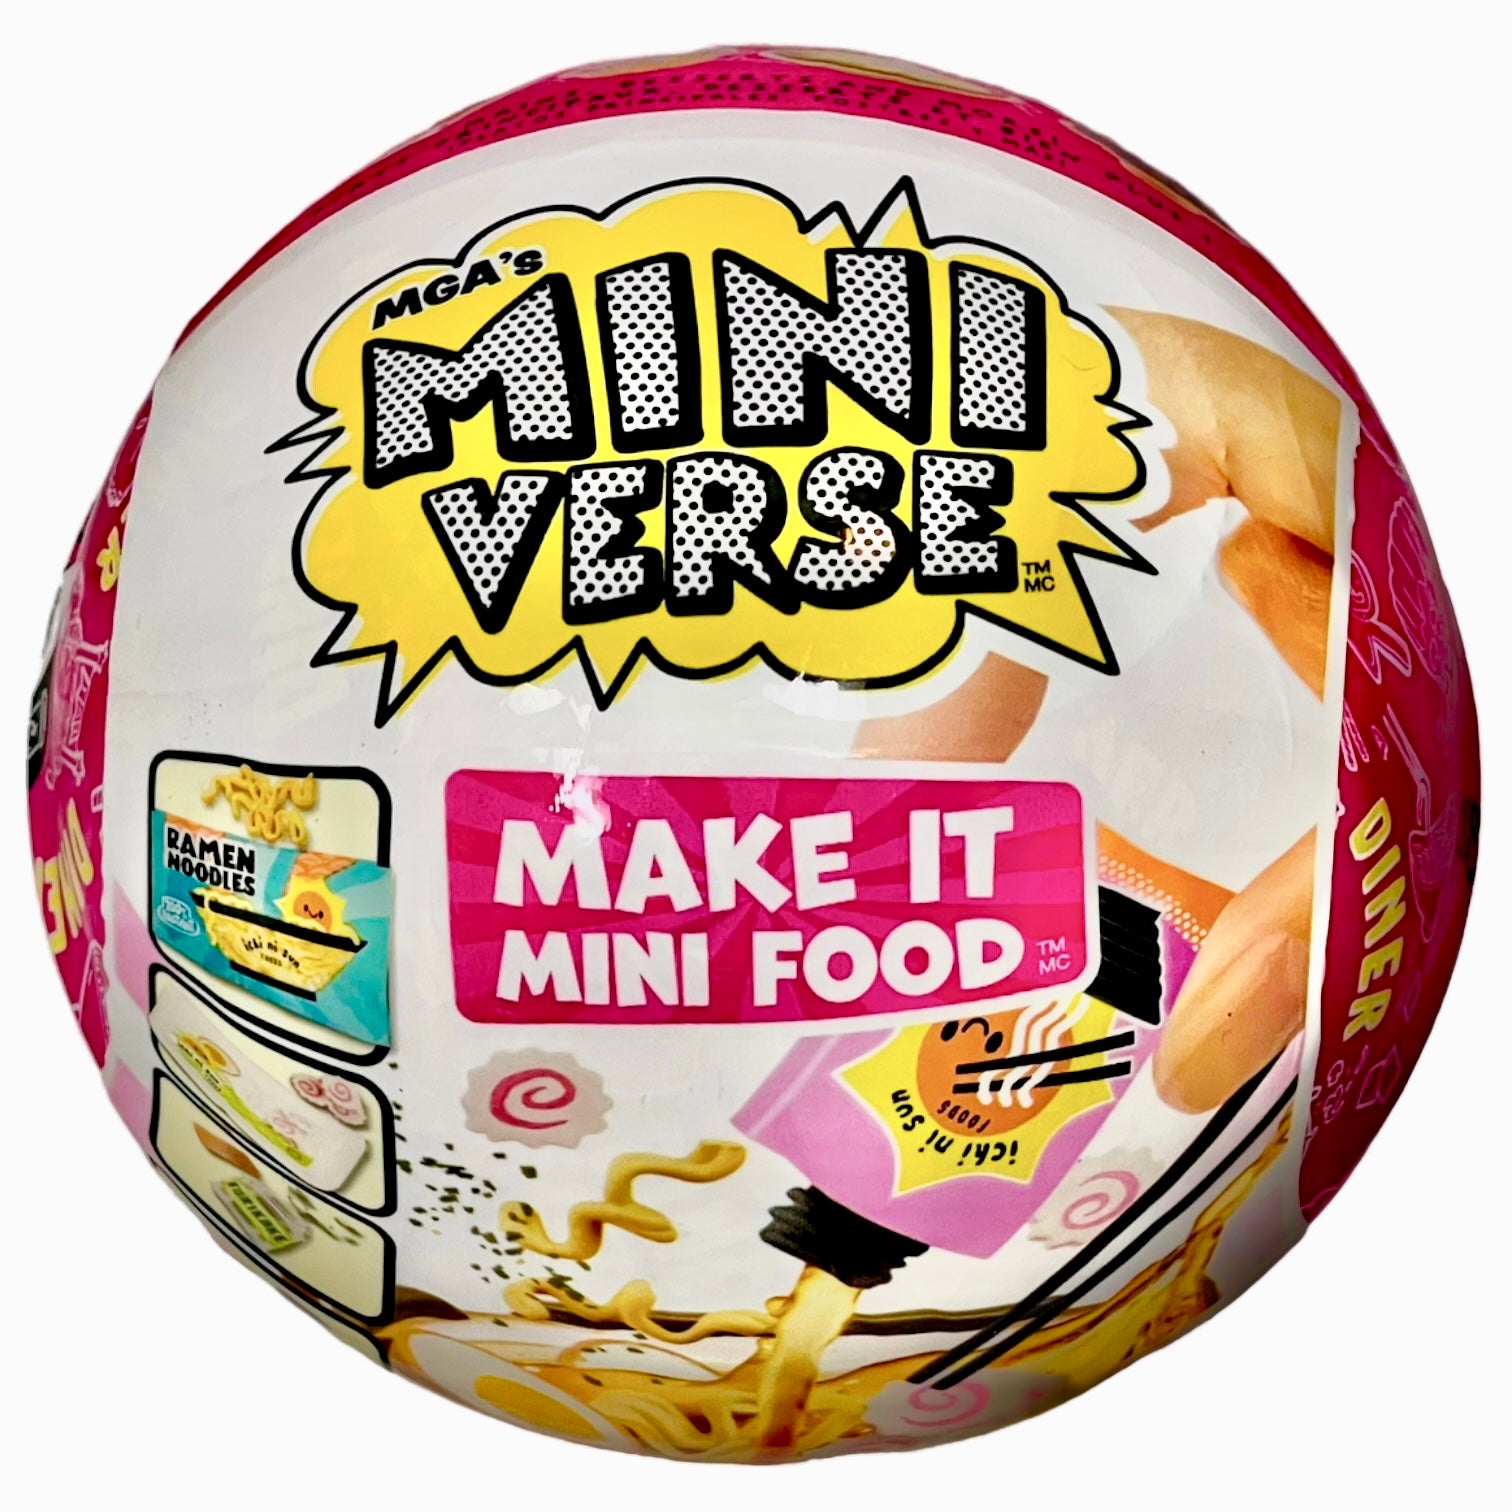 Miniverse Diner Food Series 